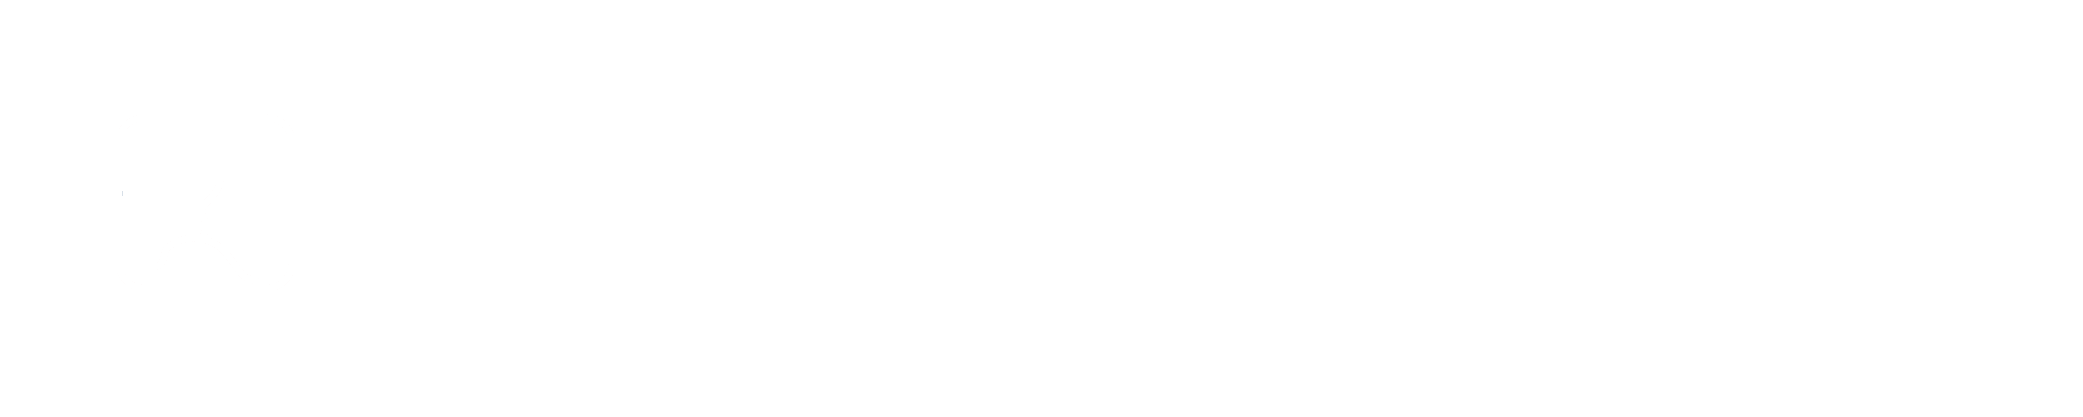 Zoning: PUD (flexible industrial zoning)